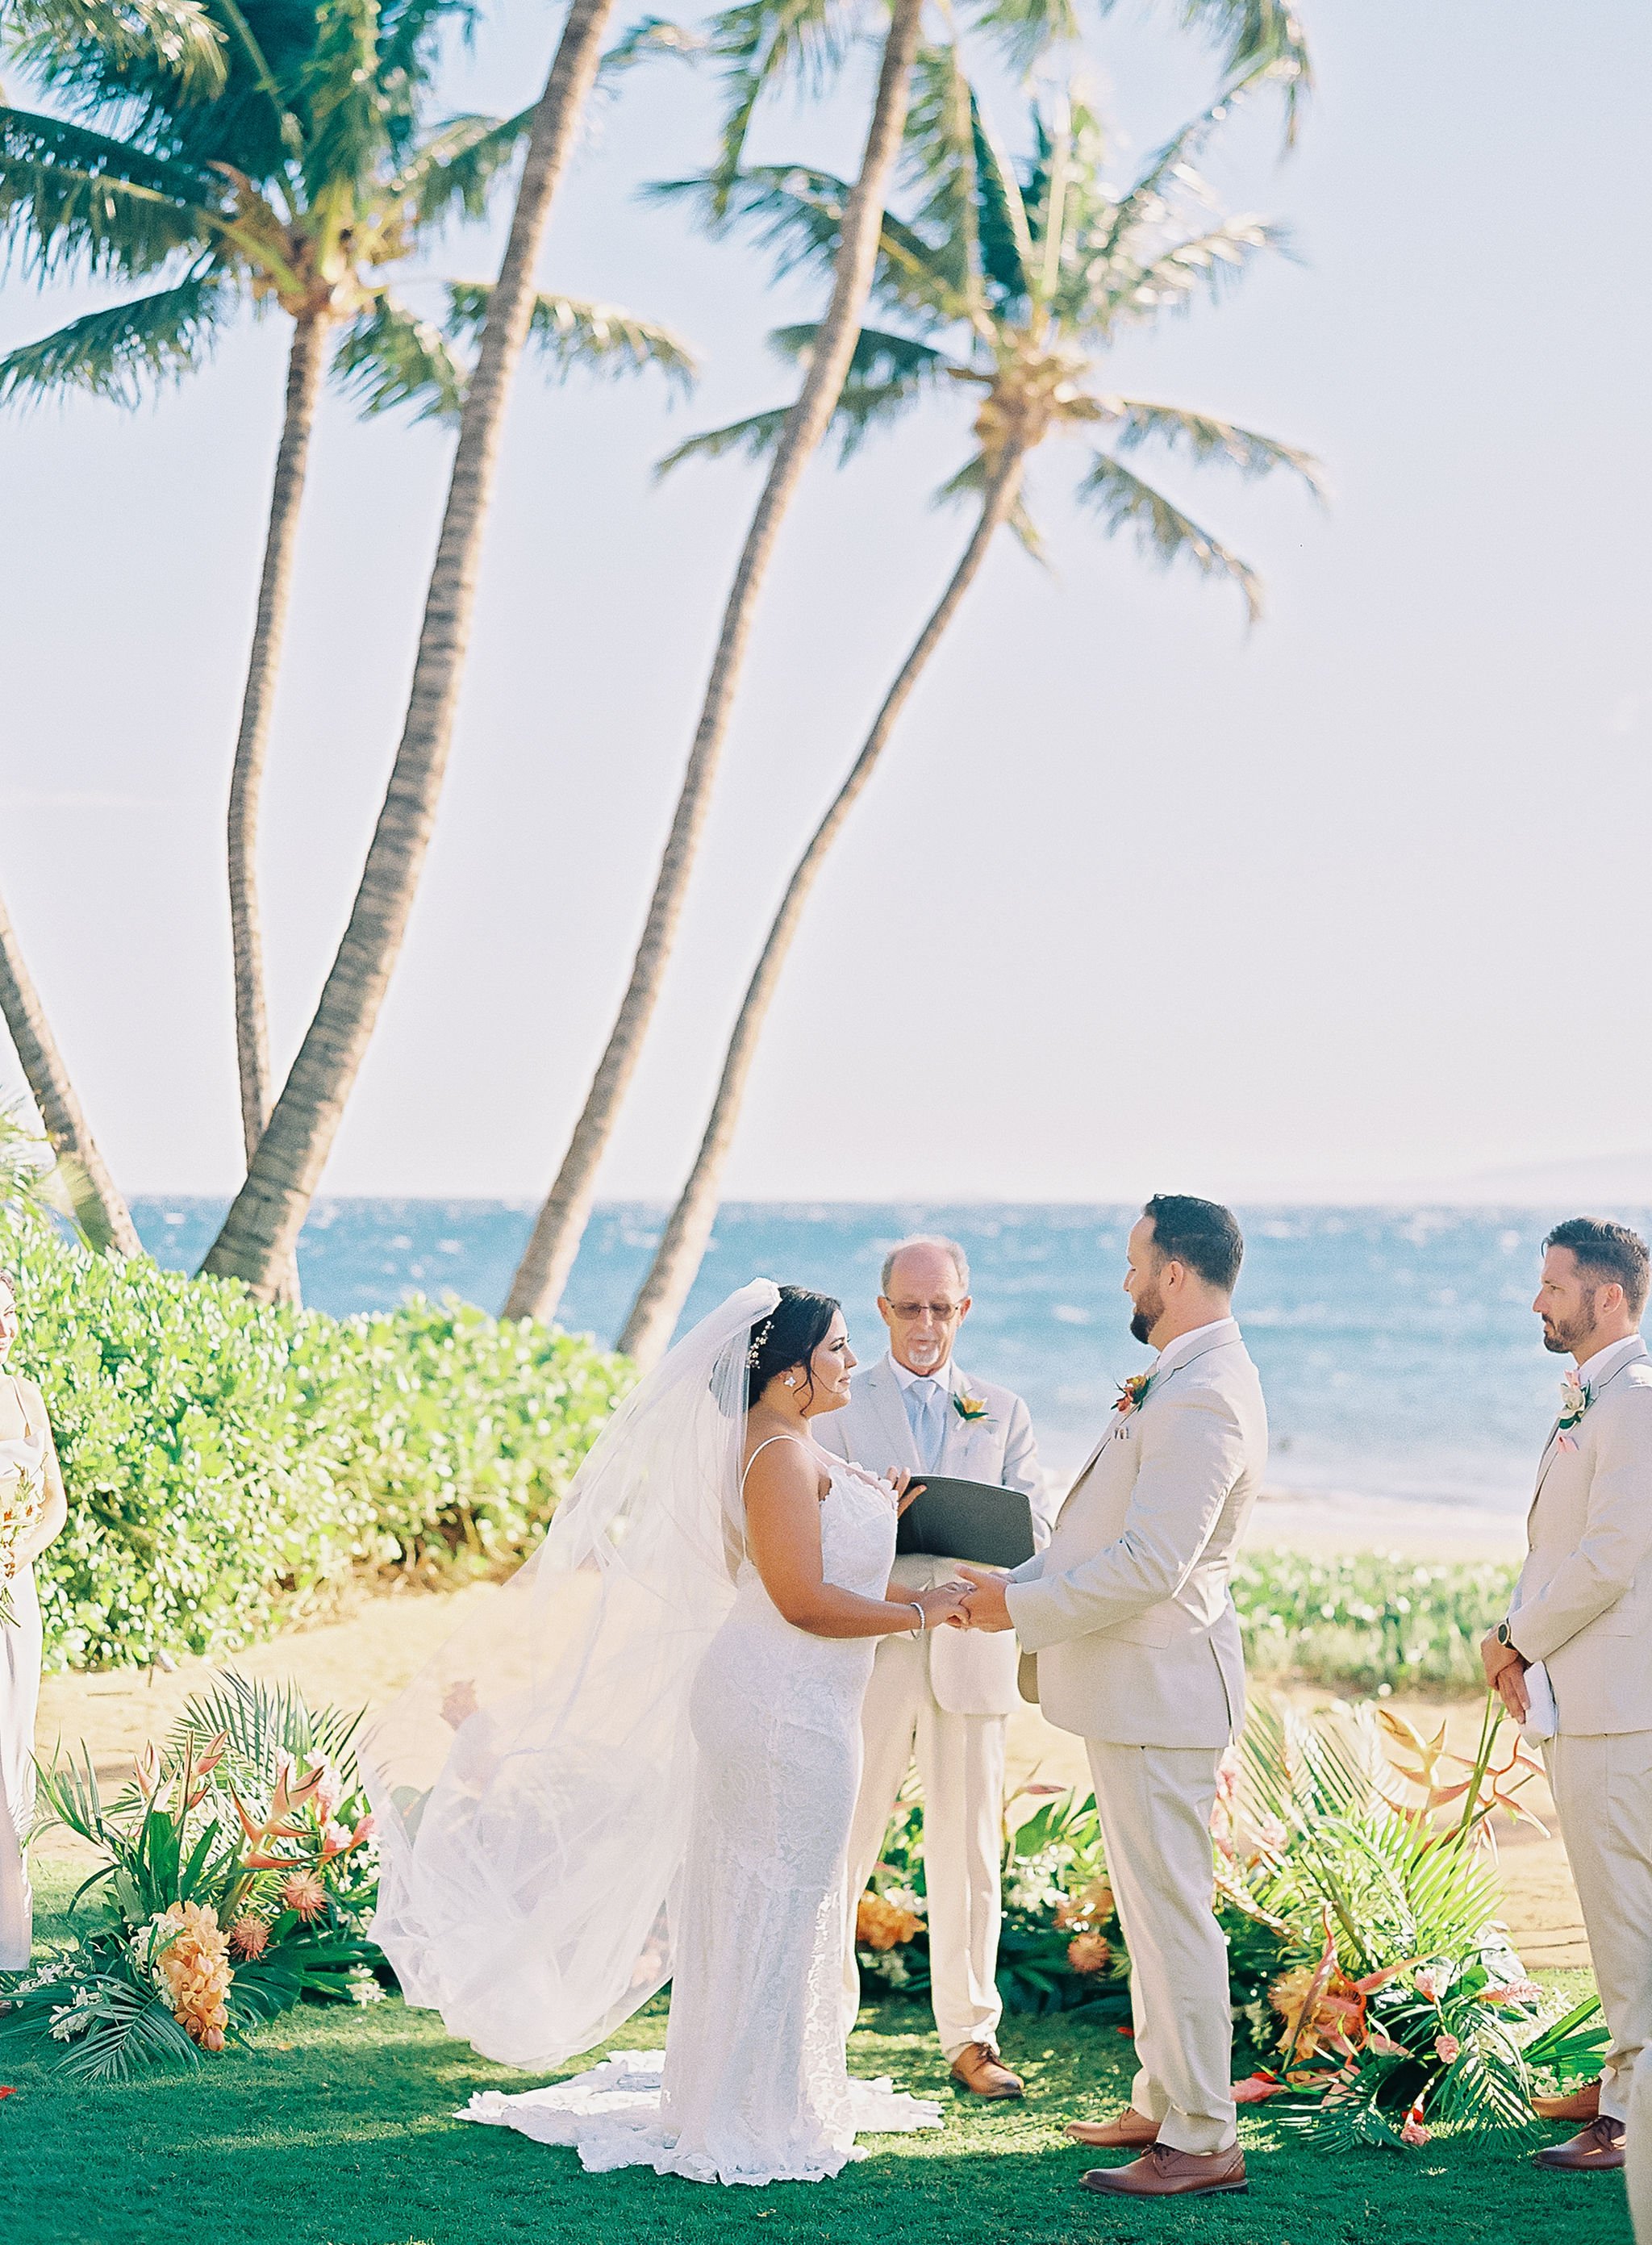 Maui Weddings, Opihi Love Wedding Design and Planning, Destination Weddings, Maui Wedding Planner 